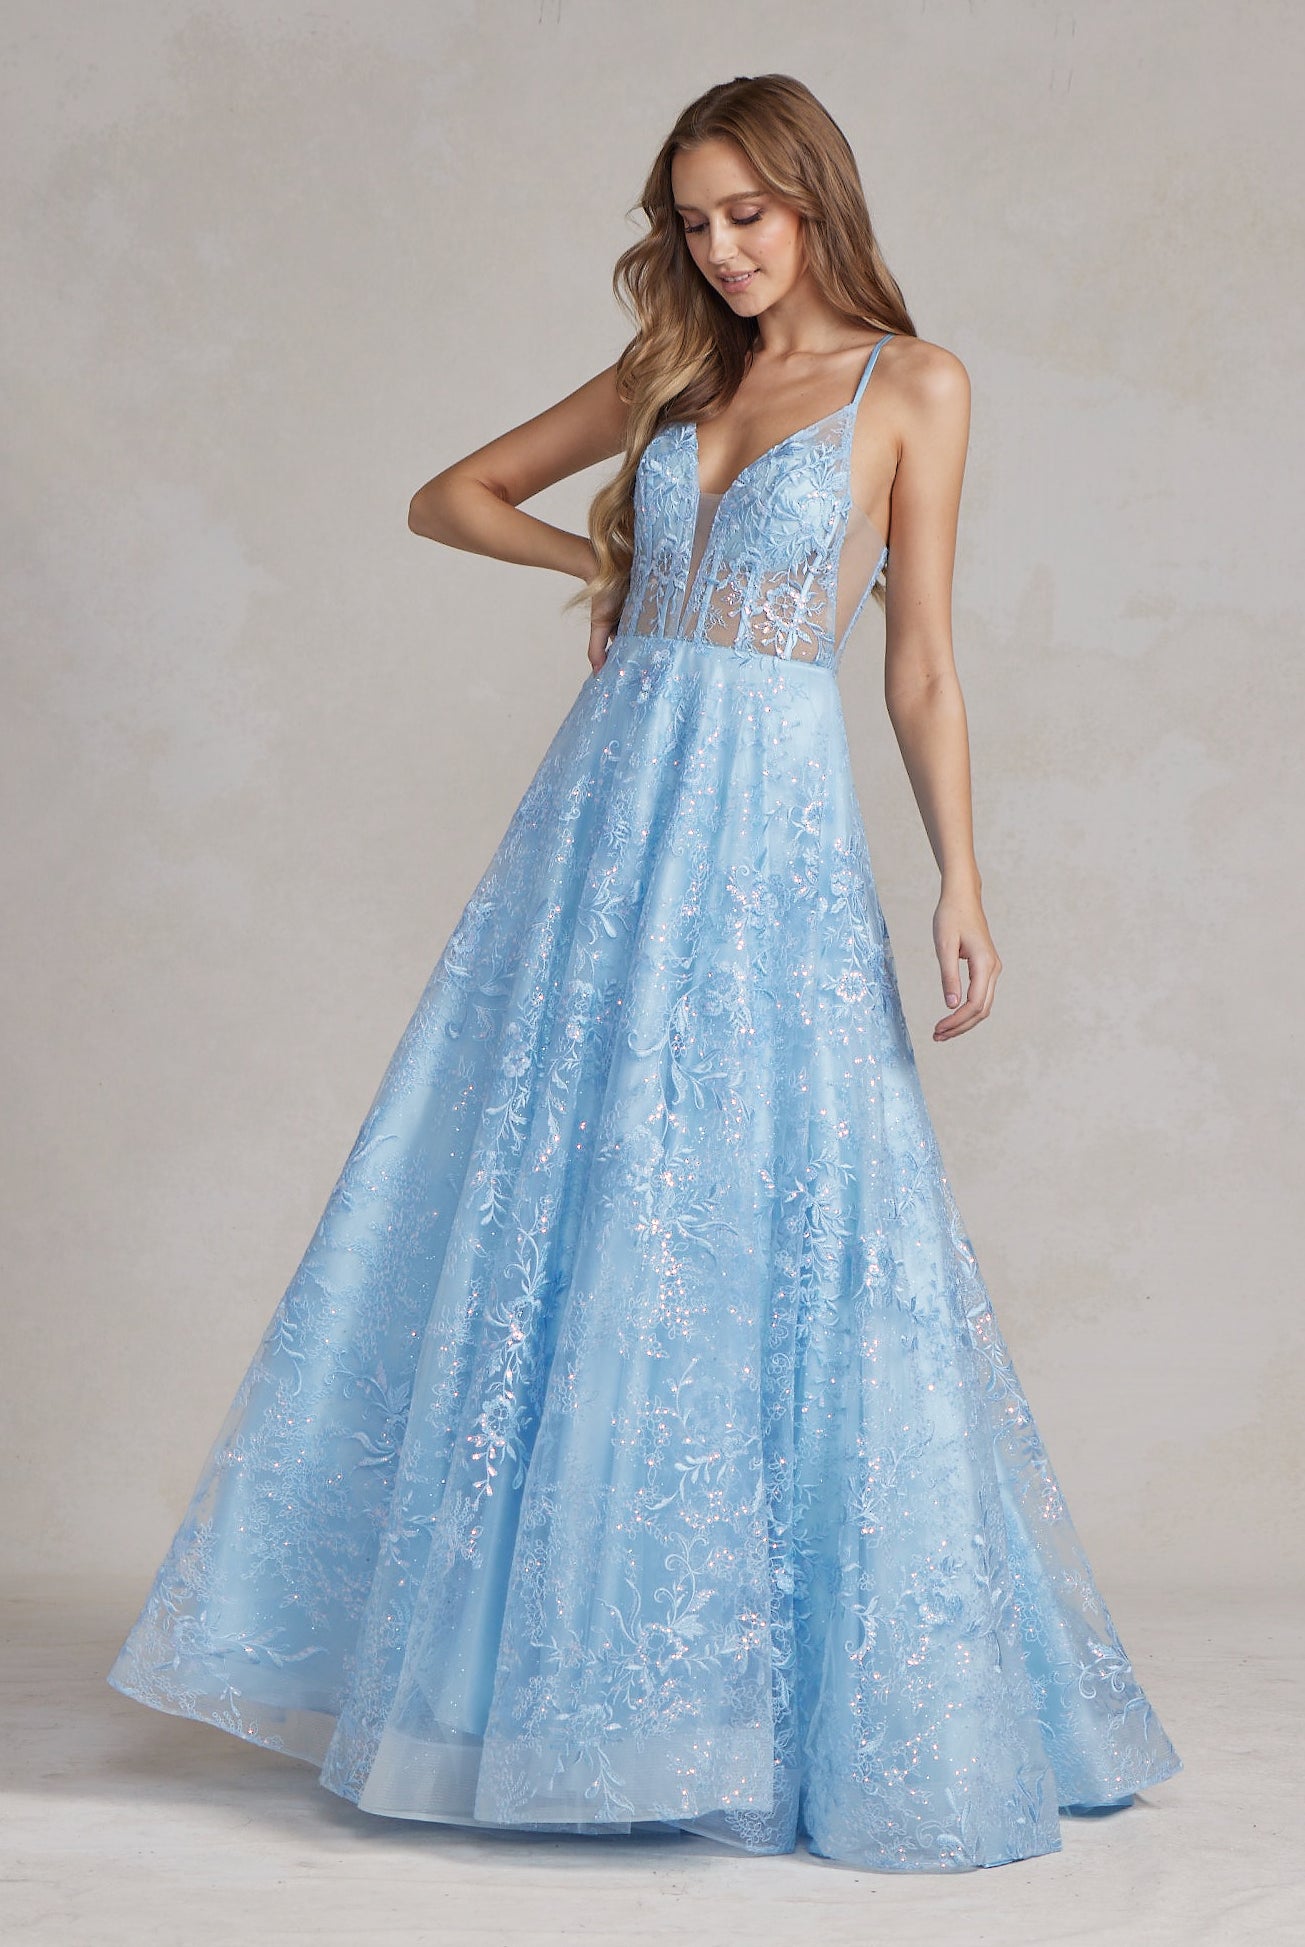 Sheer Lace Spaghetti Straps Crystal-Embellished Waistband Long Prom Dress NXC1118-Prom Dress-smcfashion.com